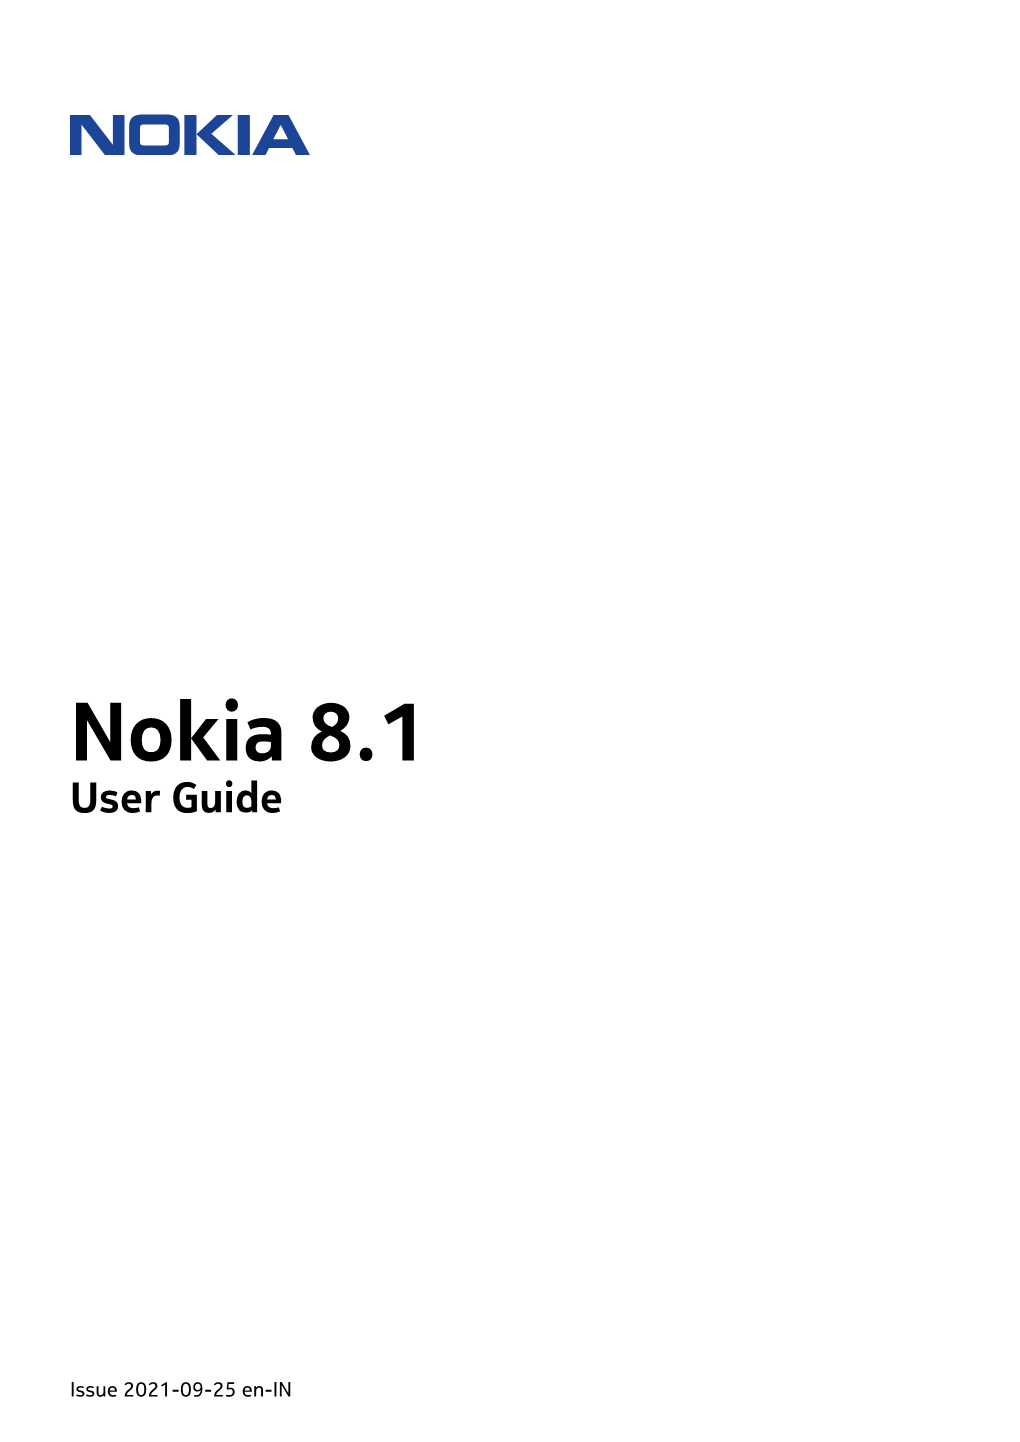 Nokia 8.1 User Guide